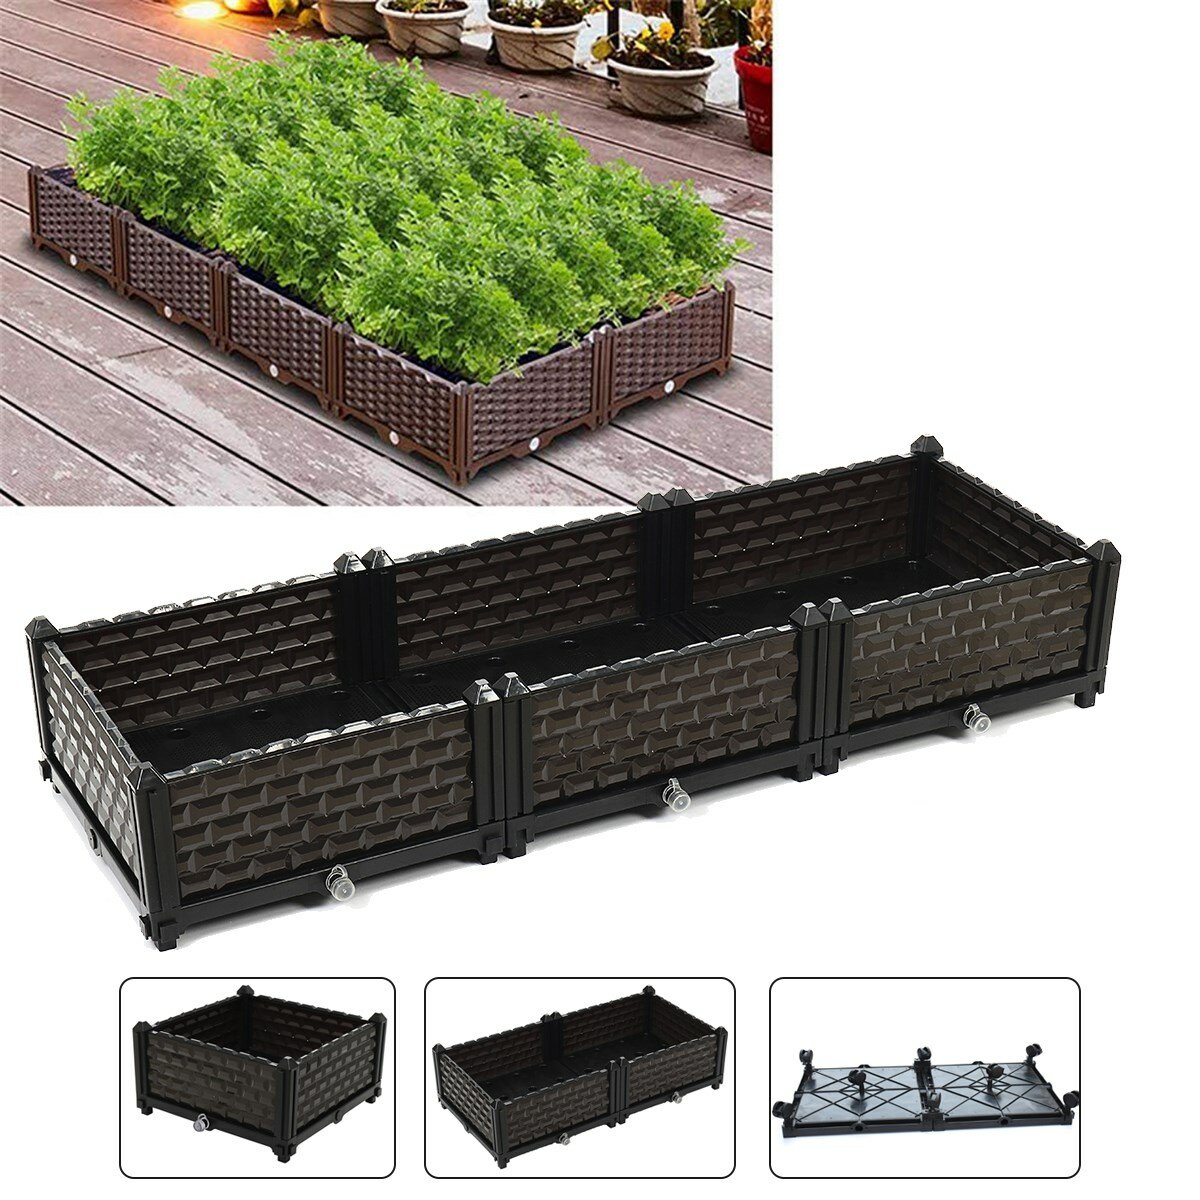 Image of Raised Garden Bed Flower Vegetable Planter Herb Box Planter Deck Indoor Outdoor